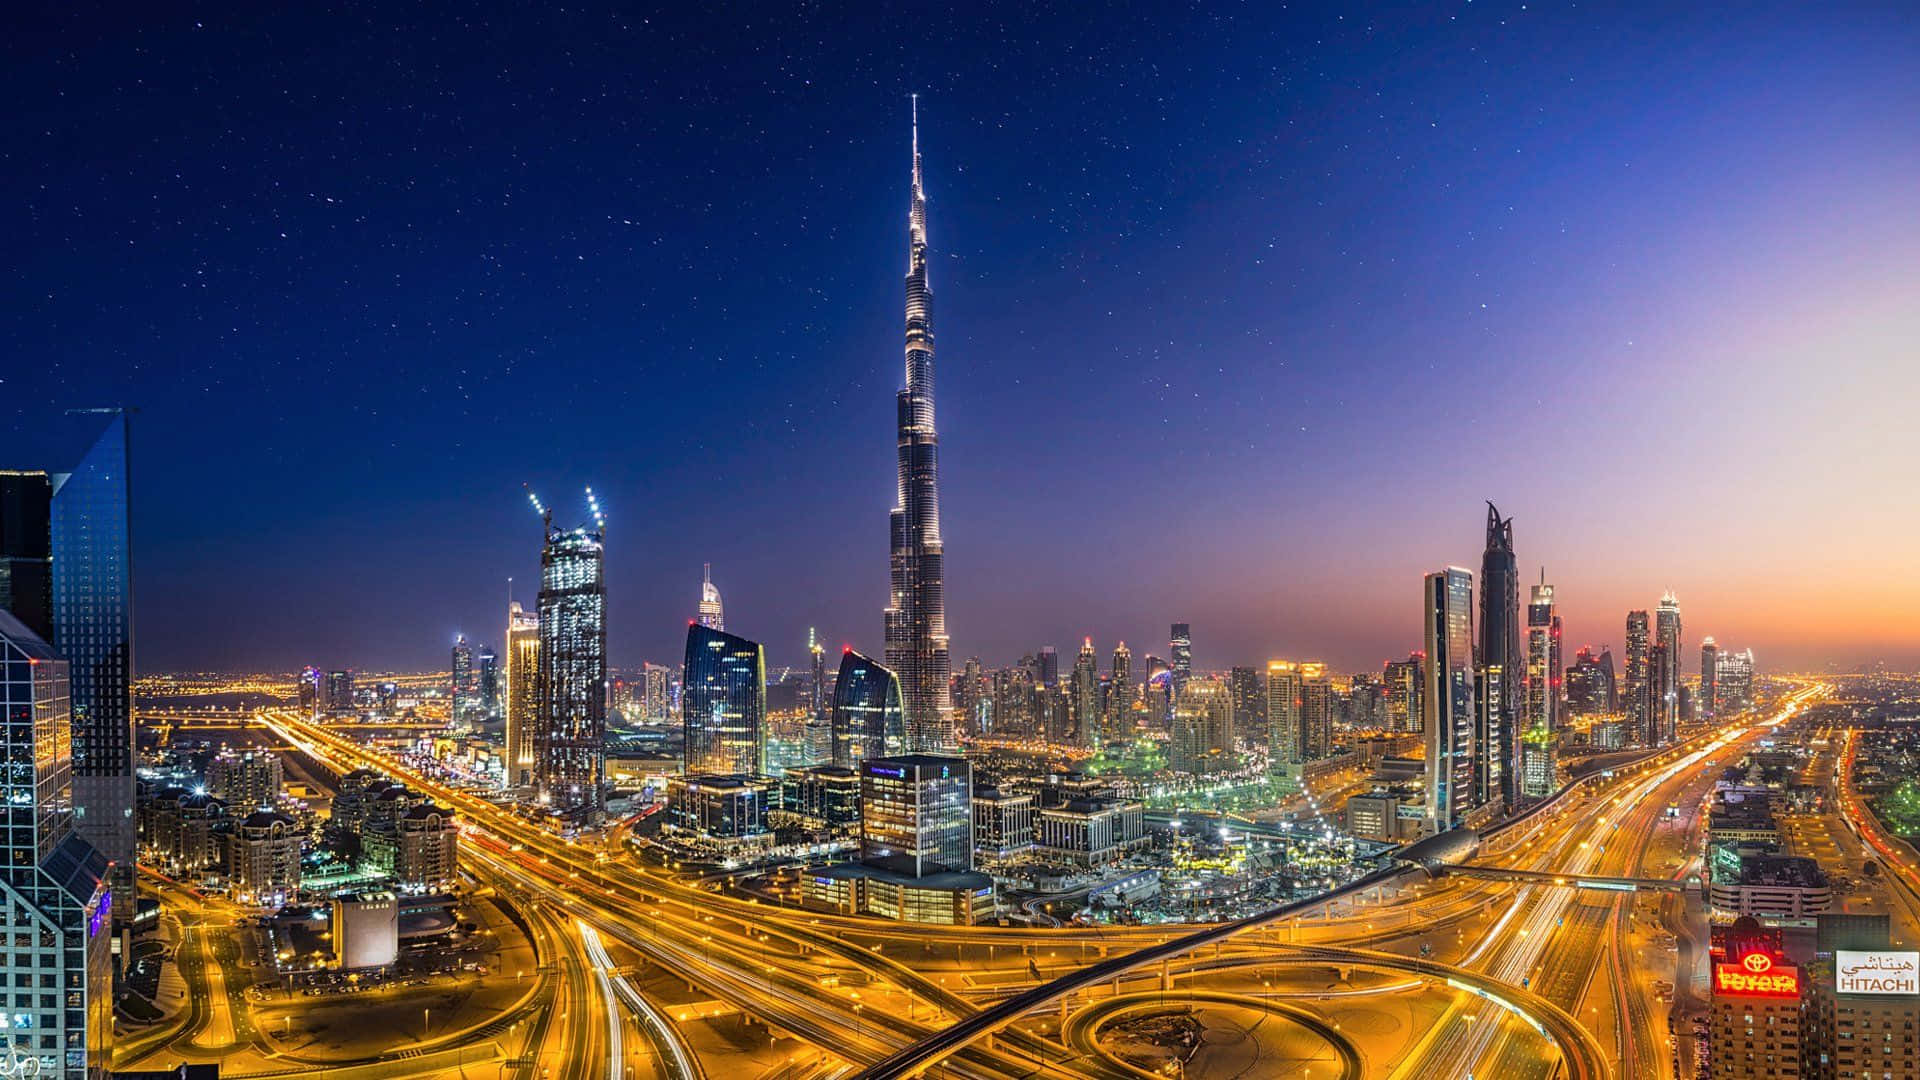 Impresionantehorizonte De Dubai Al Anochecer